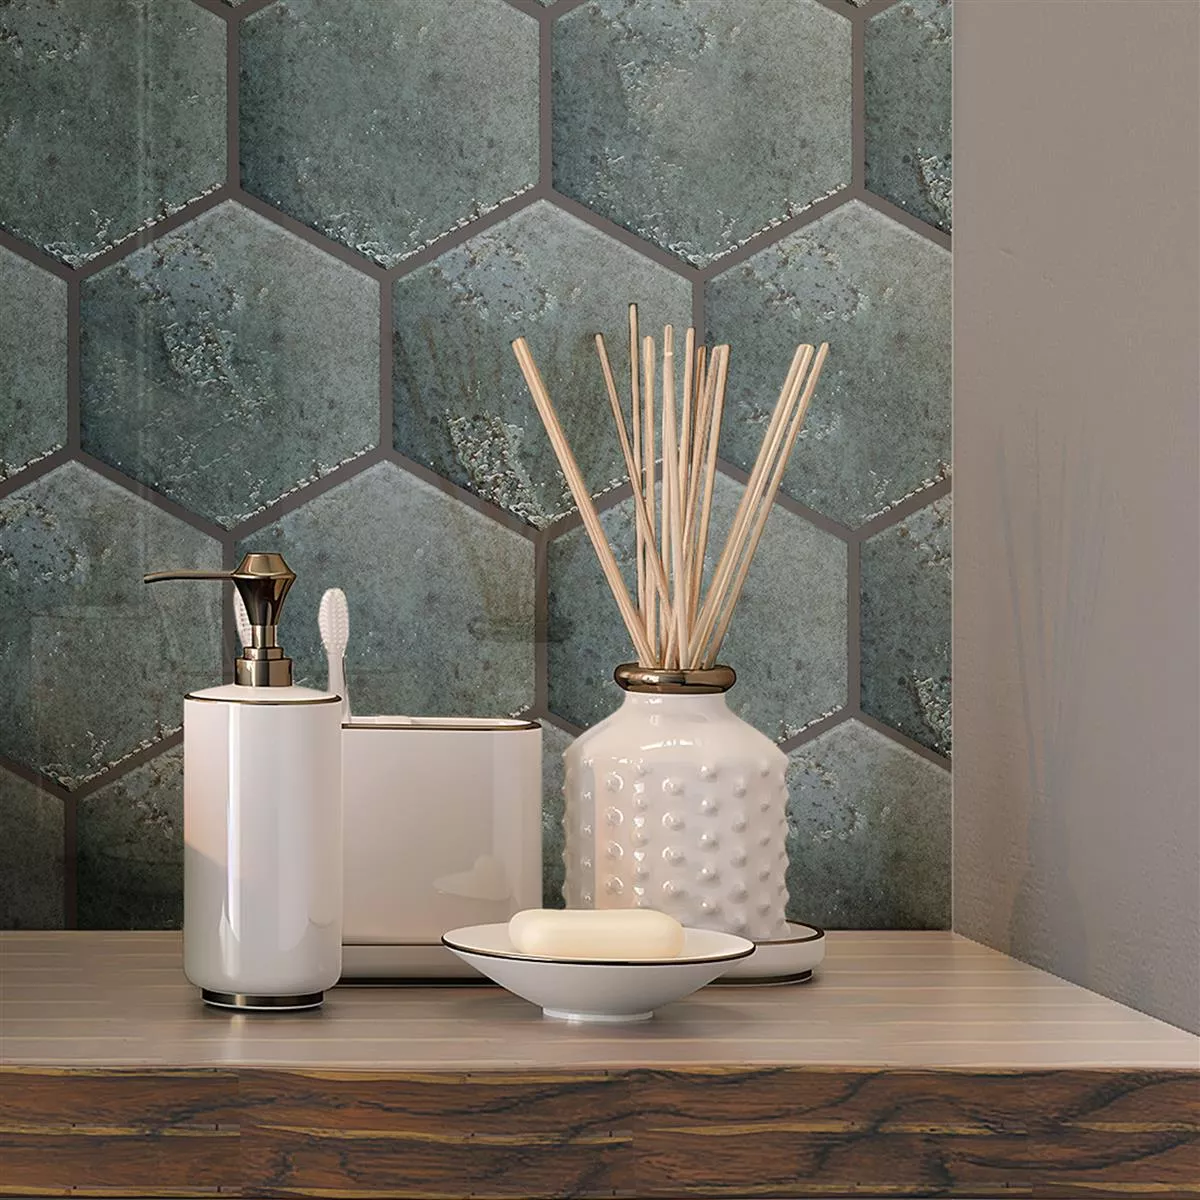 Sample Wall Tiles Lara Glossy Waved 13x15cm Hexagon Grey